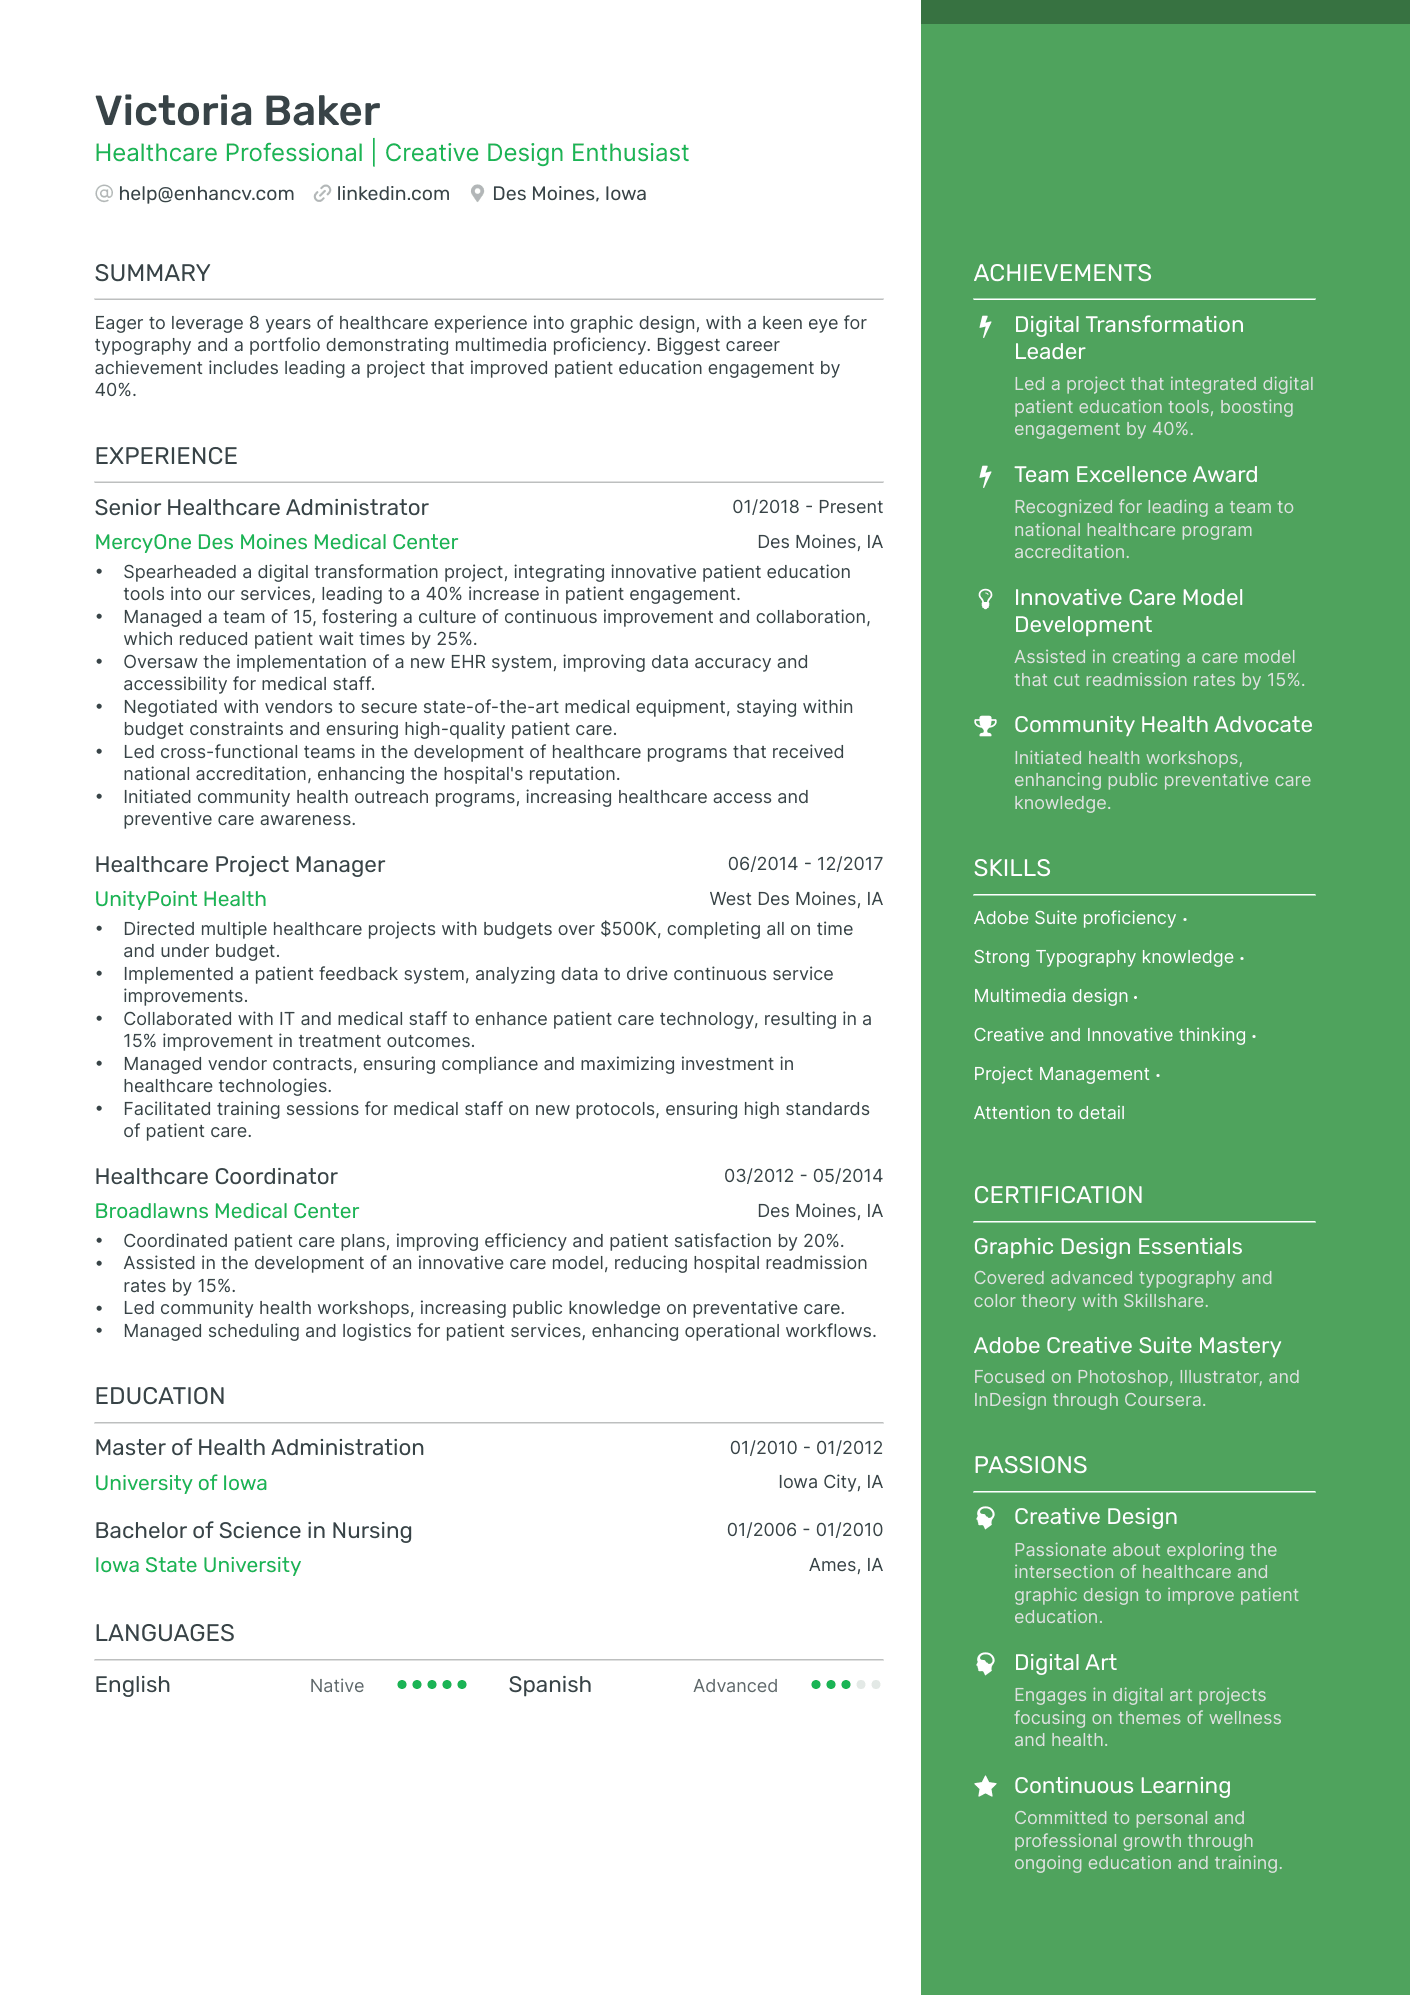 Healthcare Professional | Creative Design Enthusiast resume example